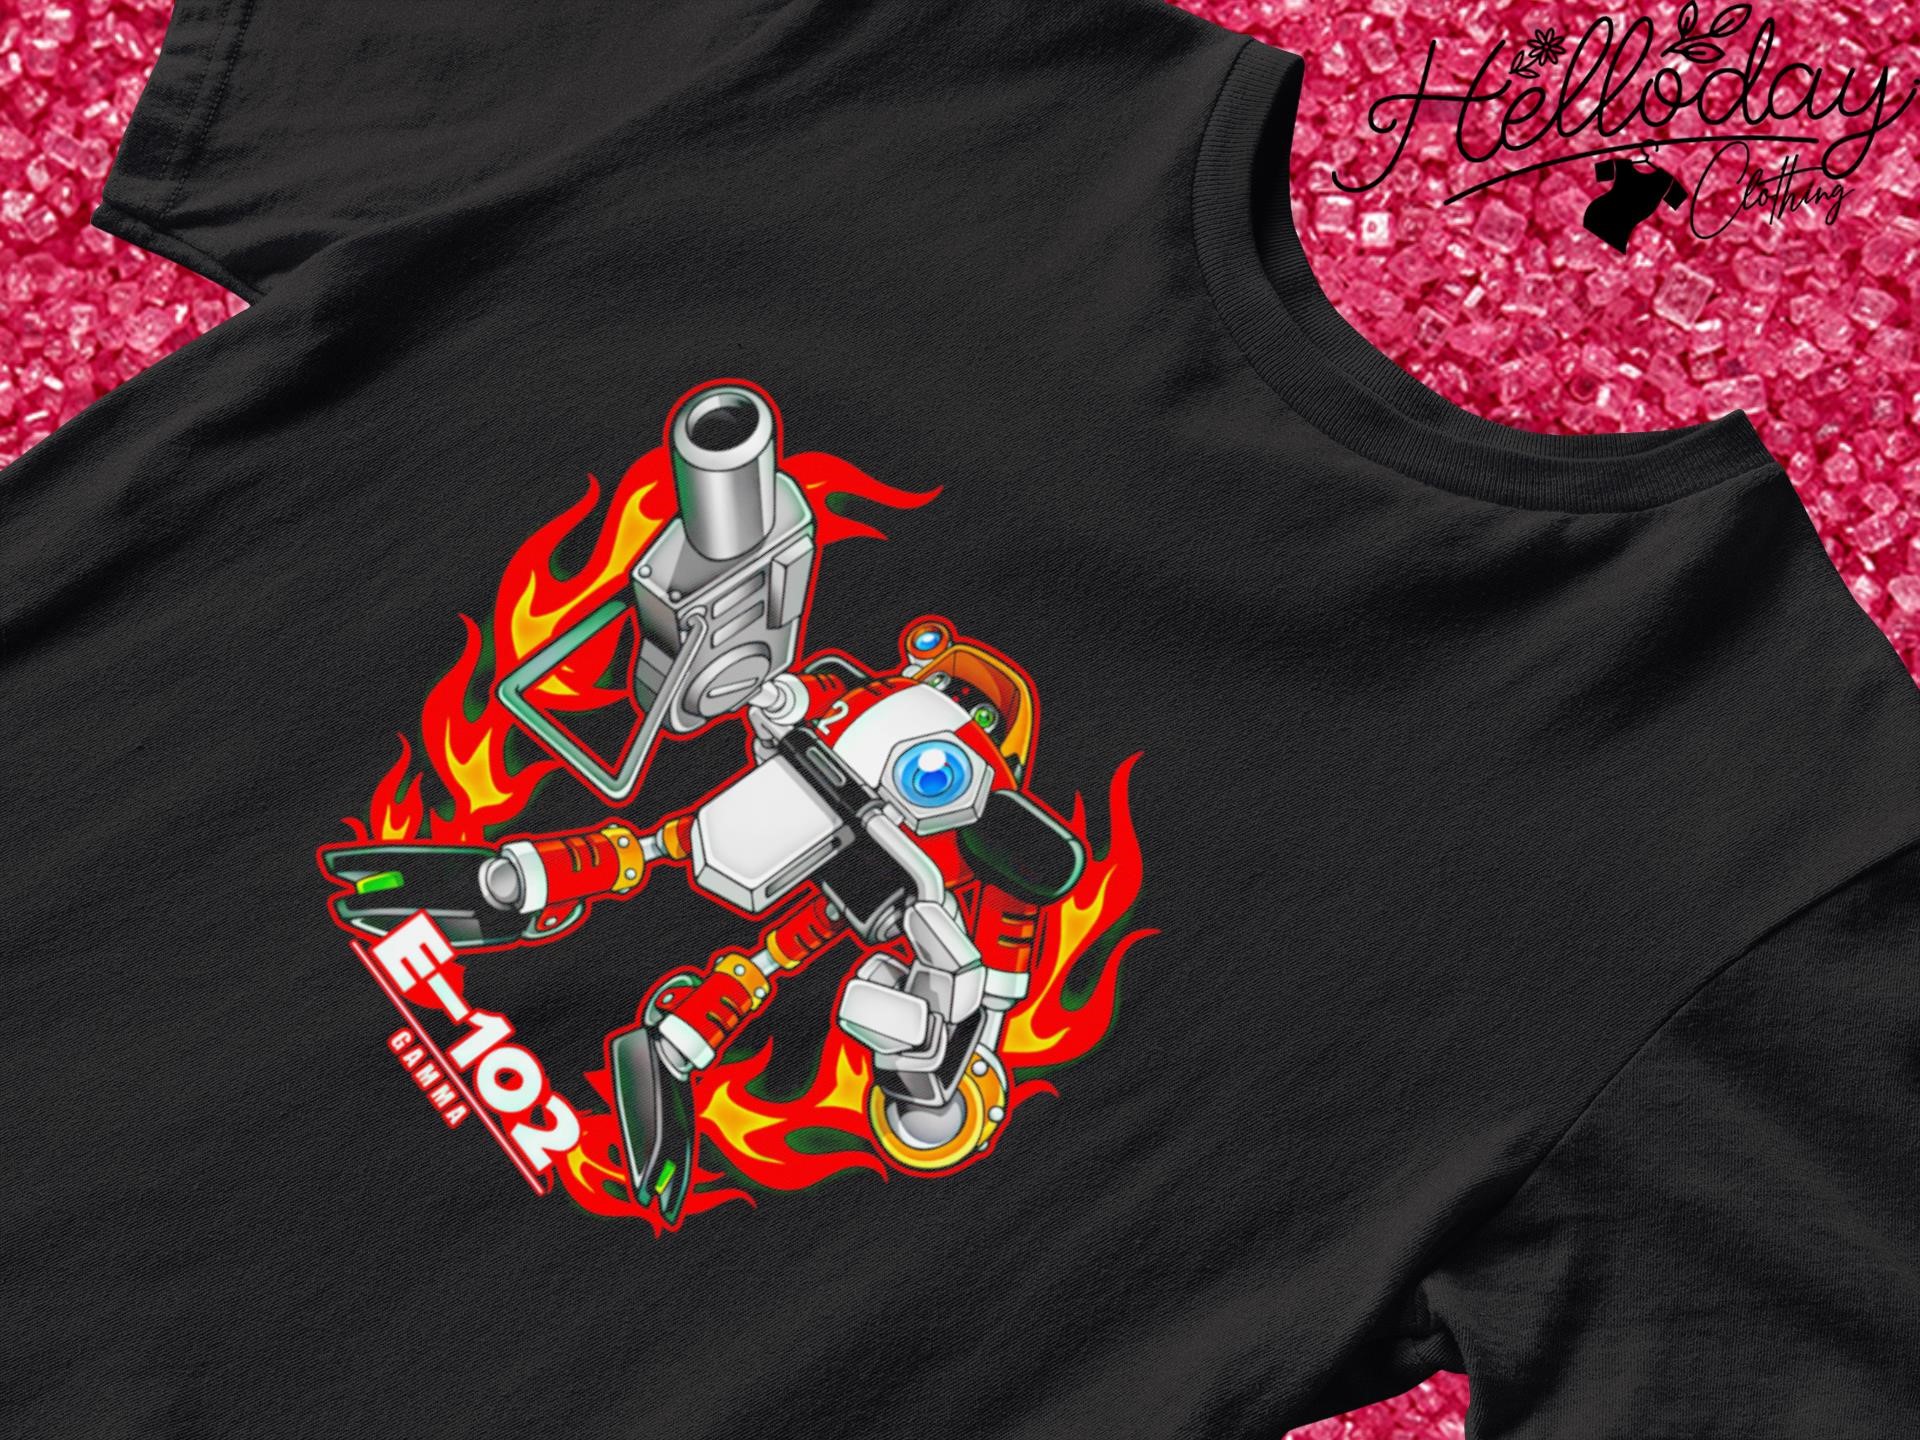 E-102 gamma Robot flame shirt